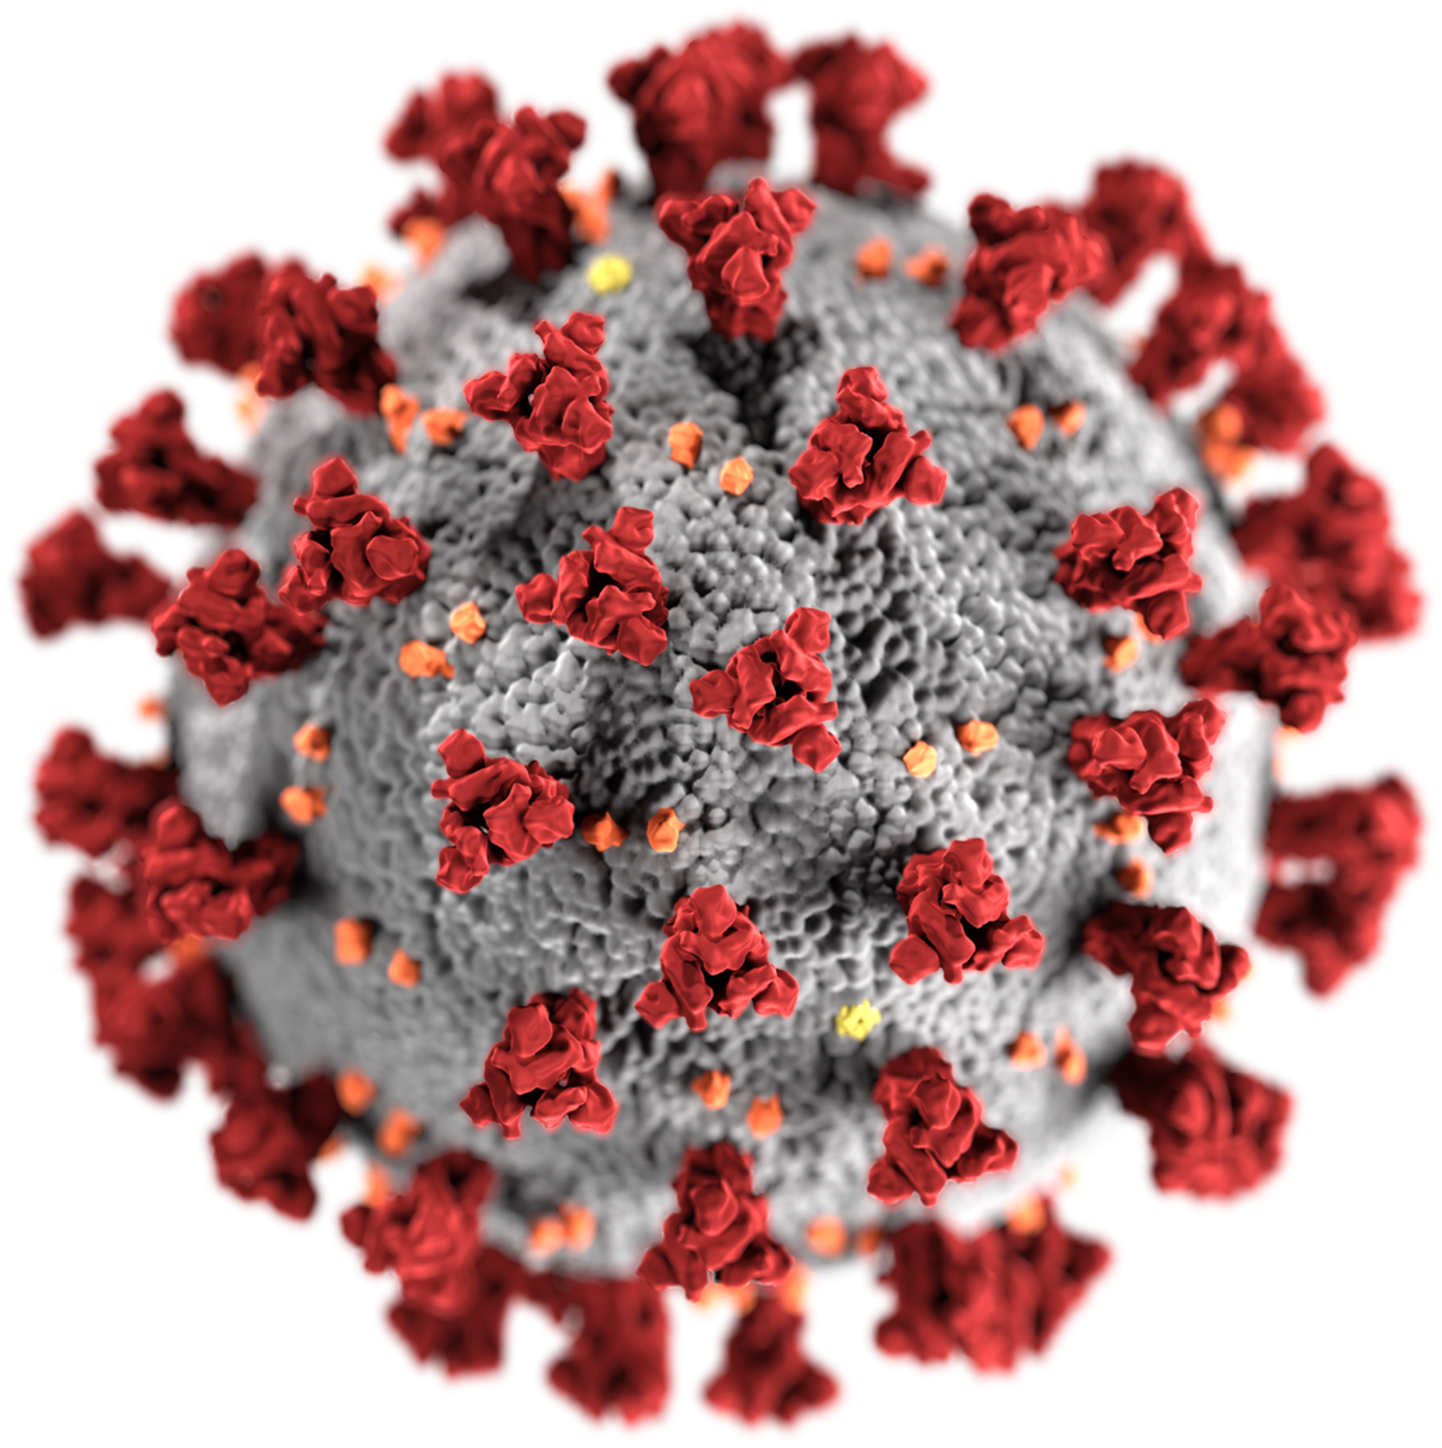 SARS CoV-2 viirus